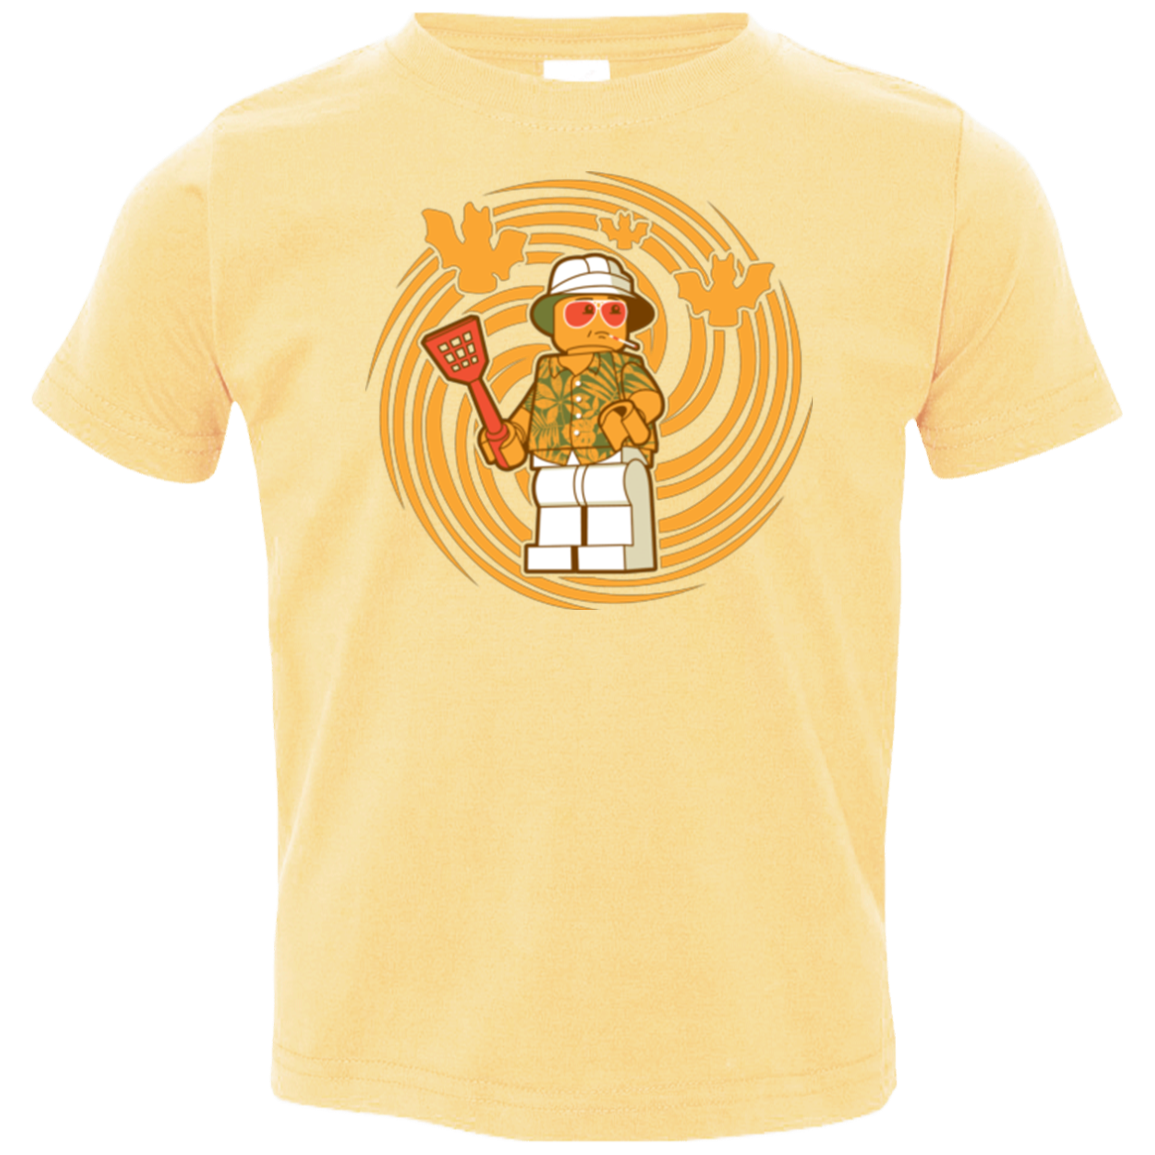 Brick Country Toddler Premium T-Shirt